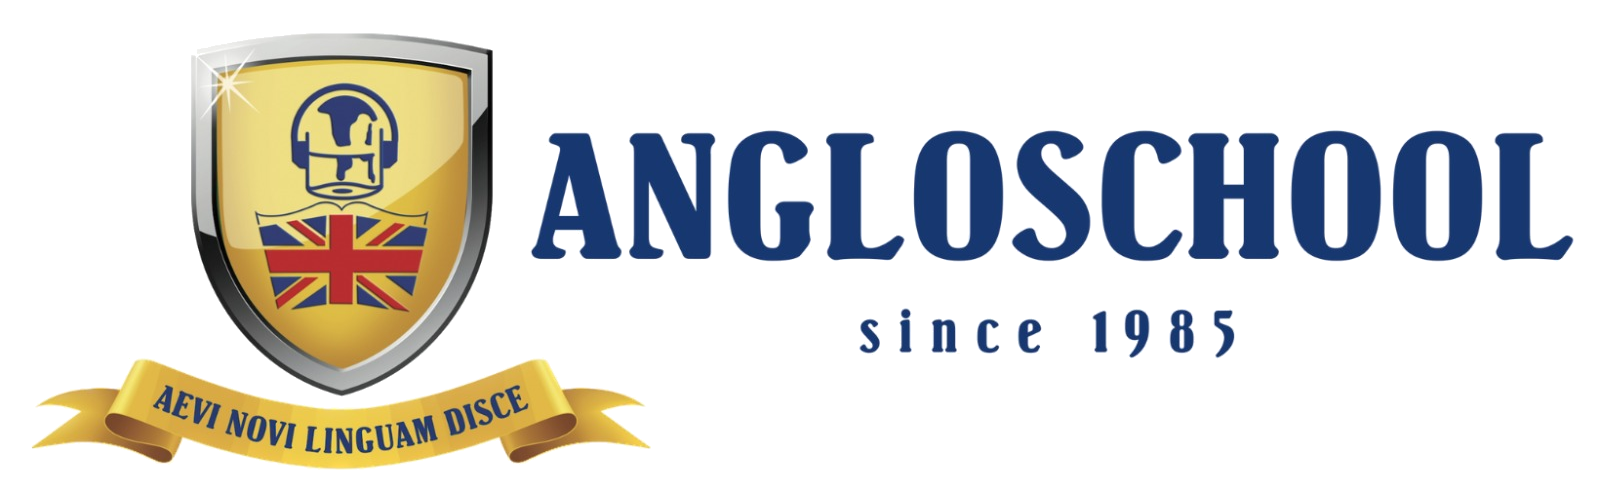 logo_angloschool